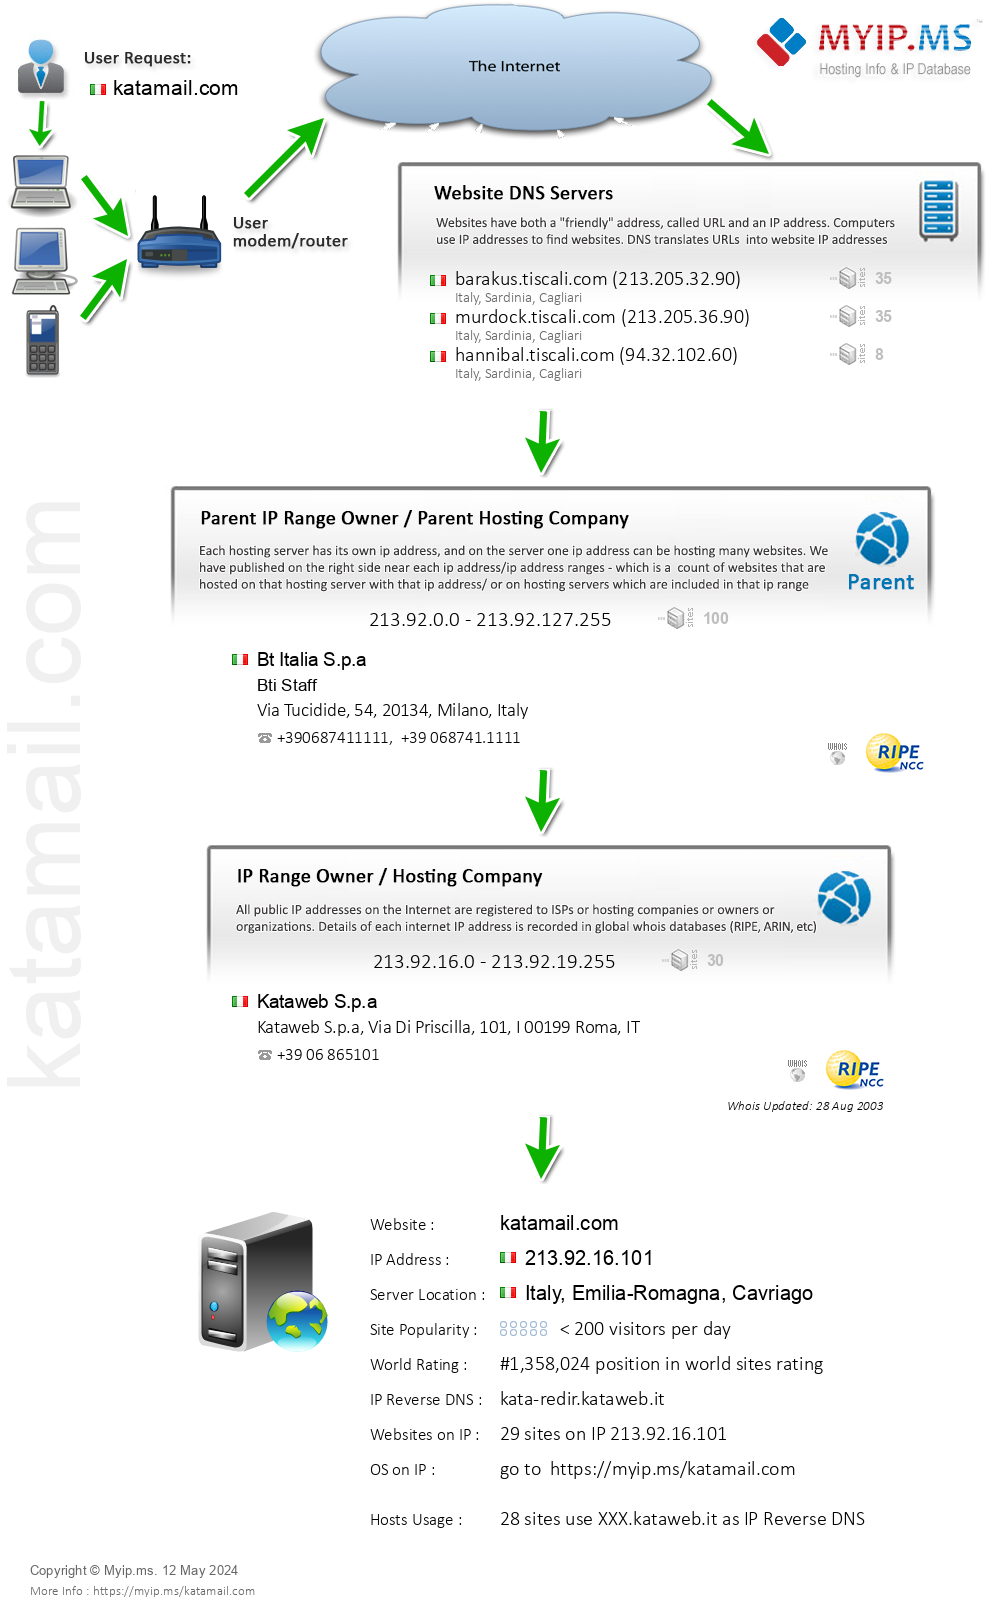 Katamail.com - Website Hosting Visual IP Diagram